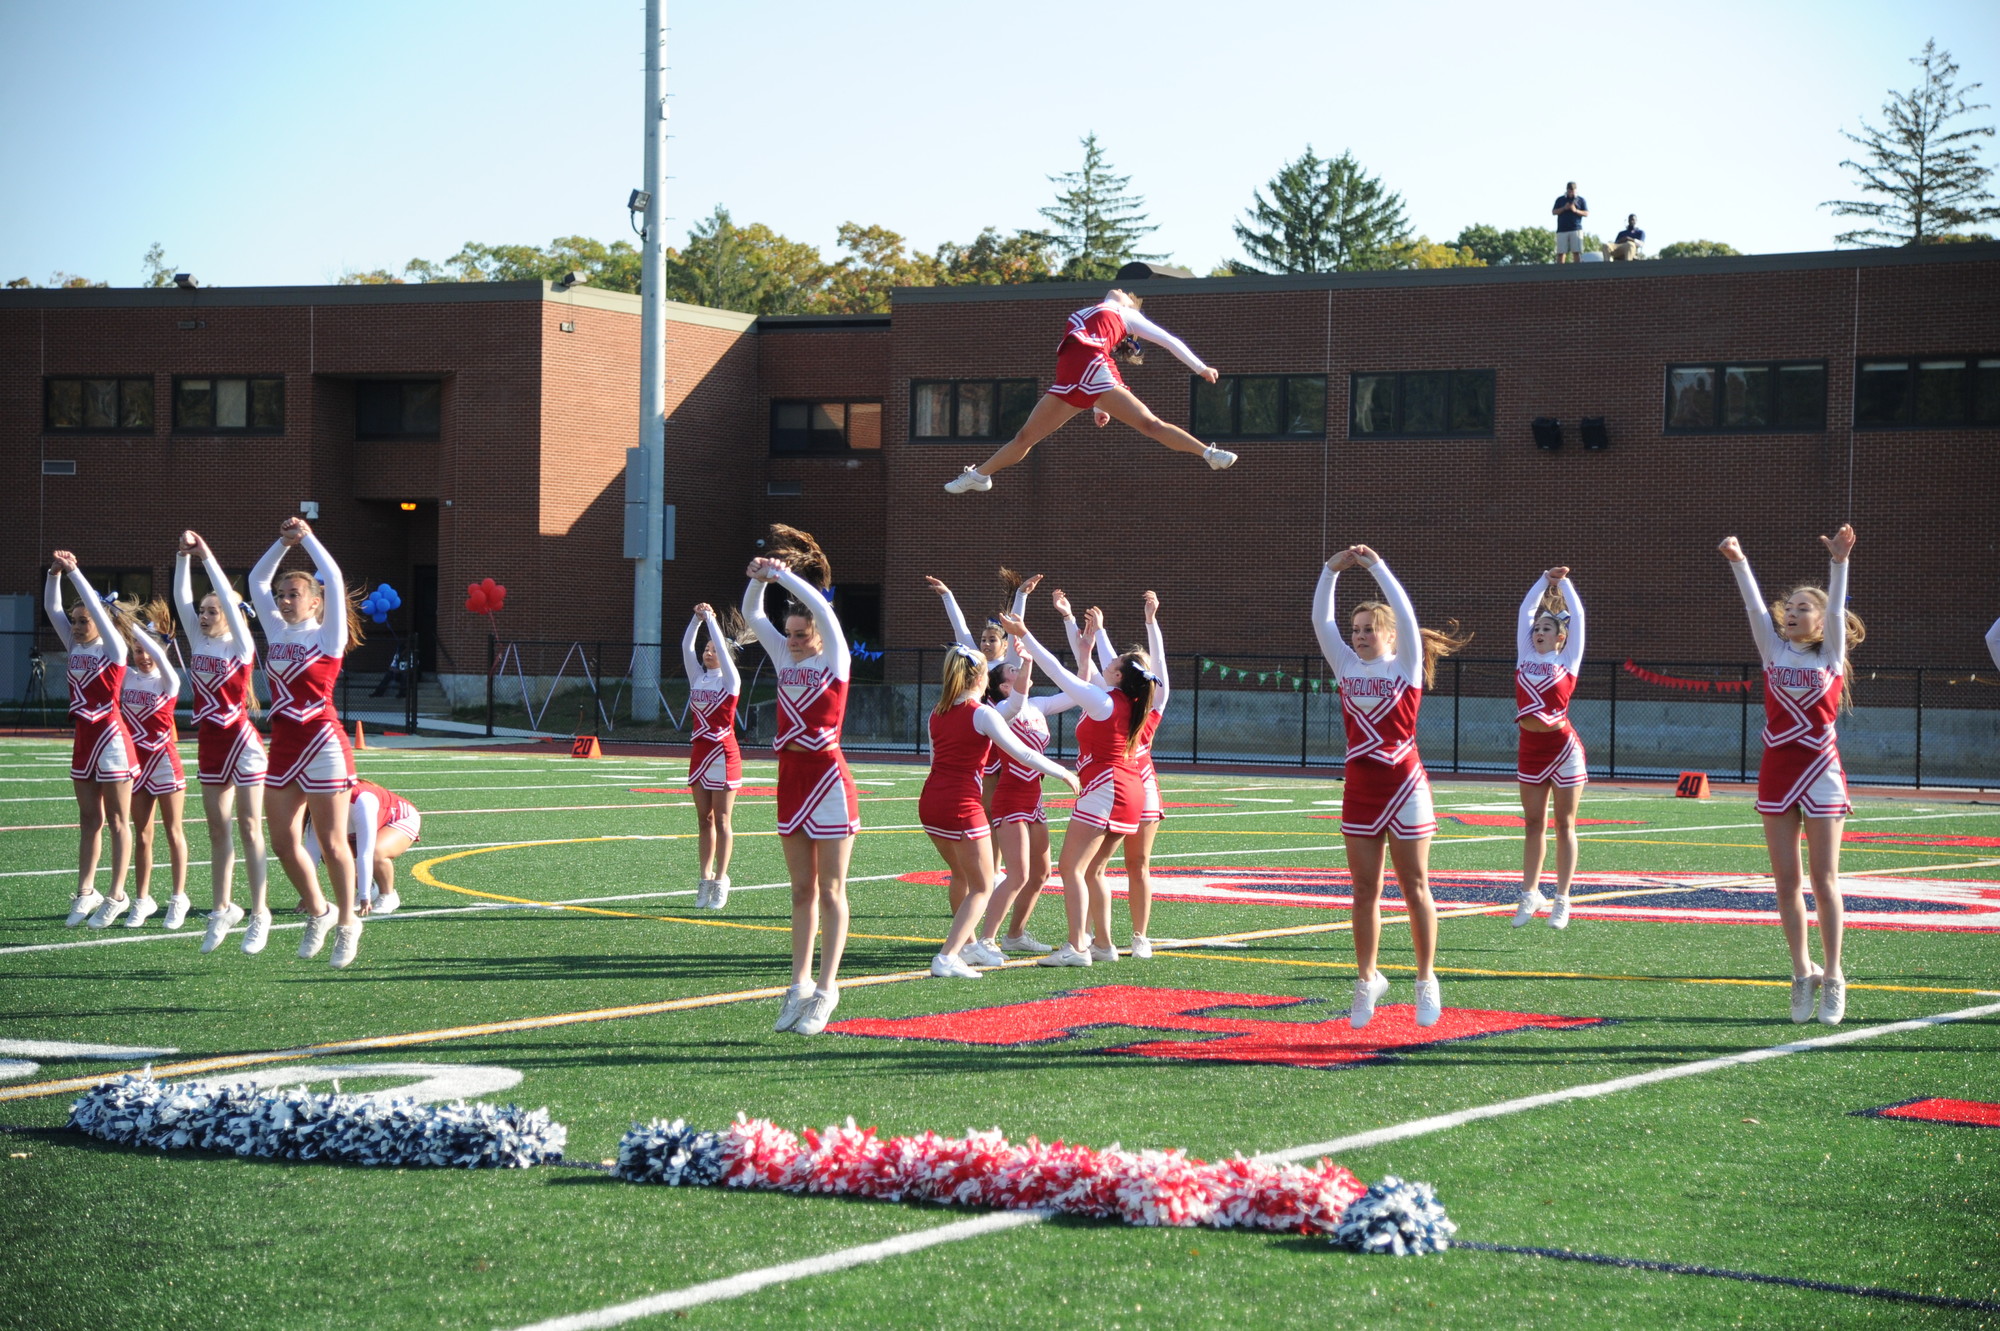 The school’s cheerleaders showed off their impressive skills during halftime.